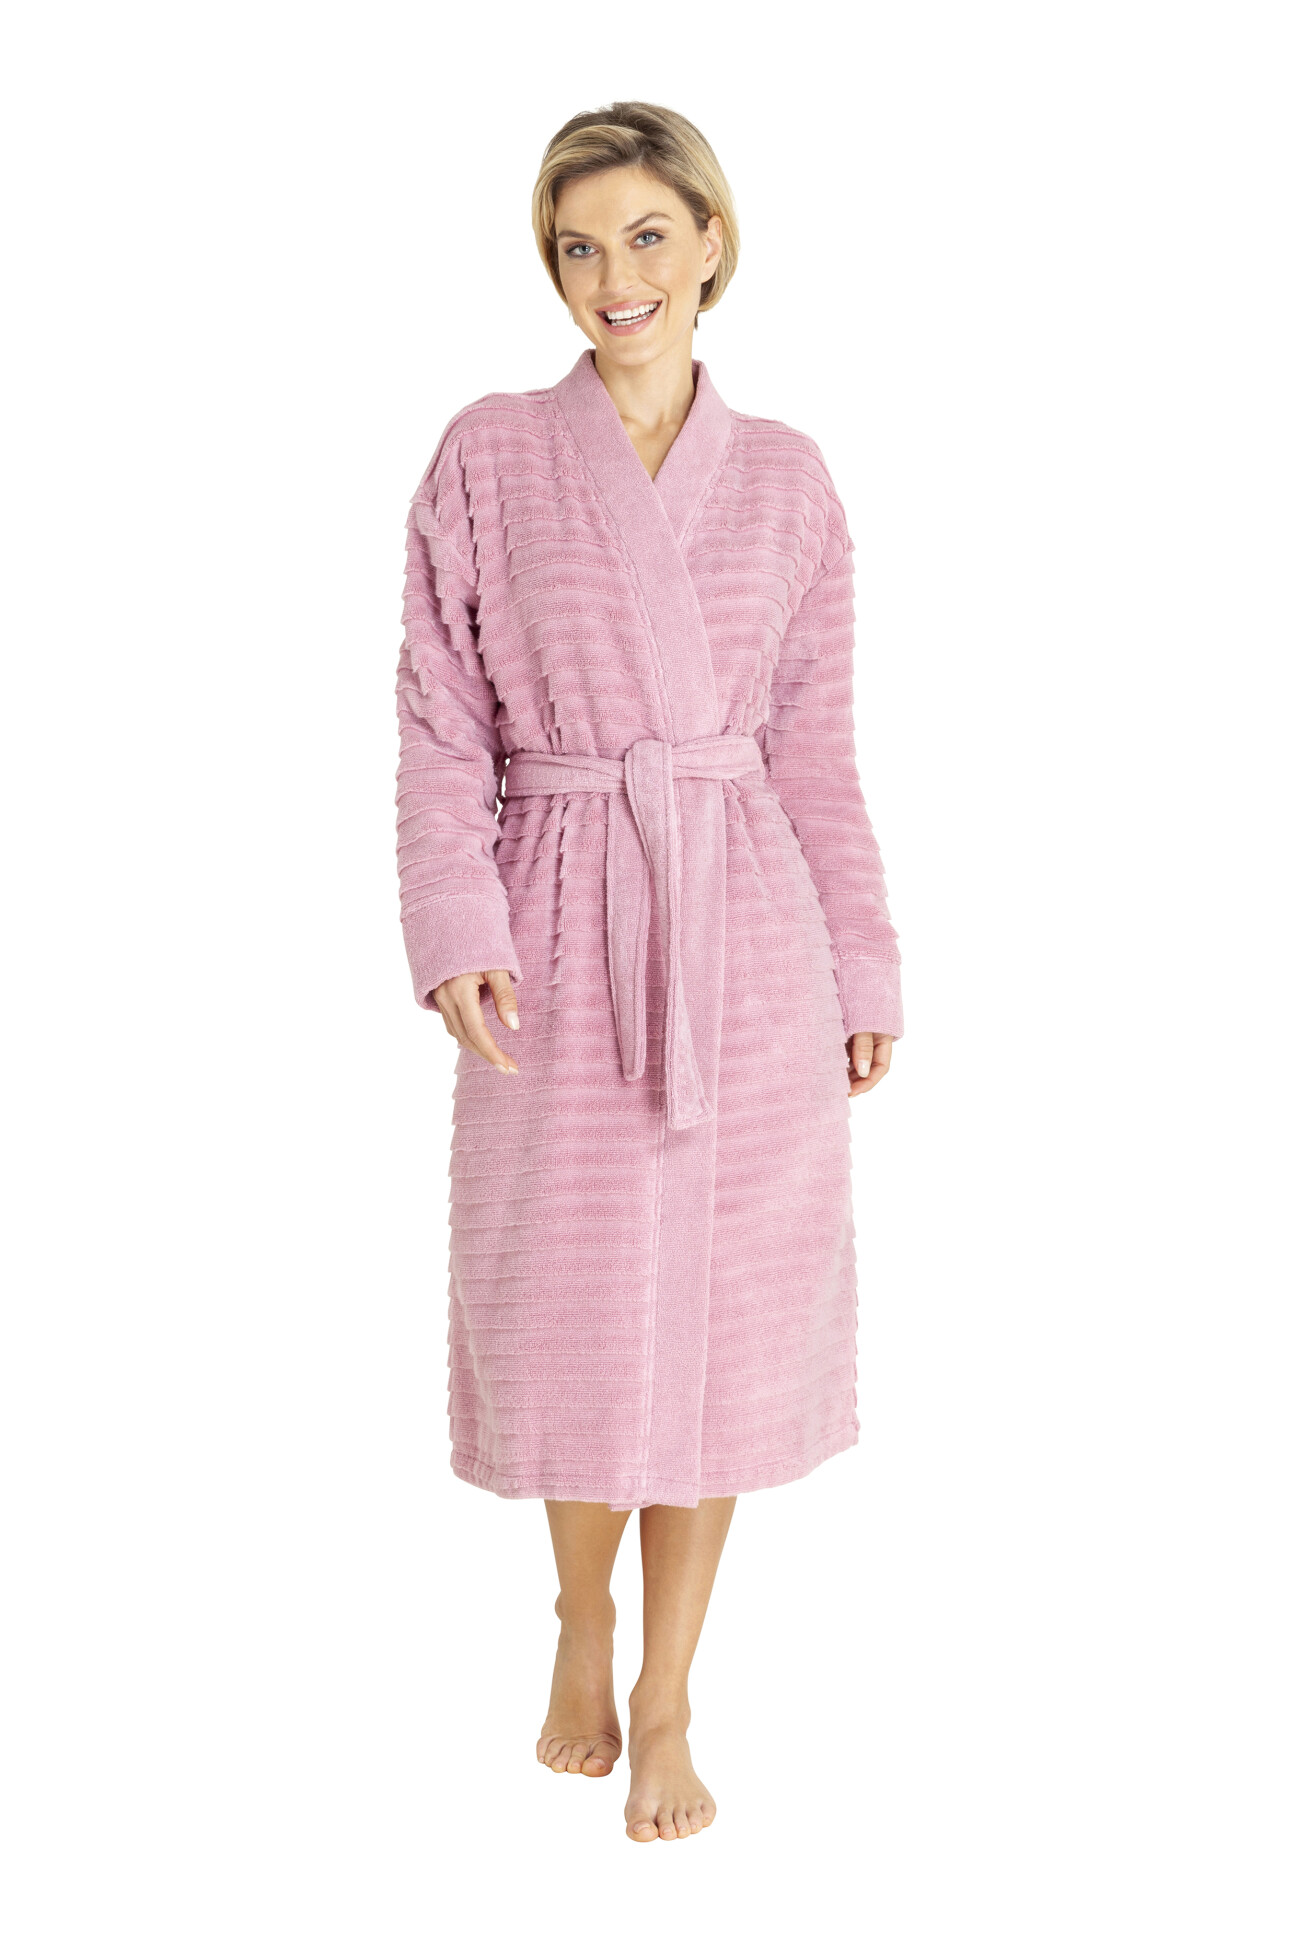 Kimono 115 cm, Premium Cotton